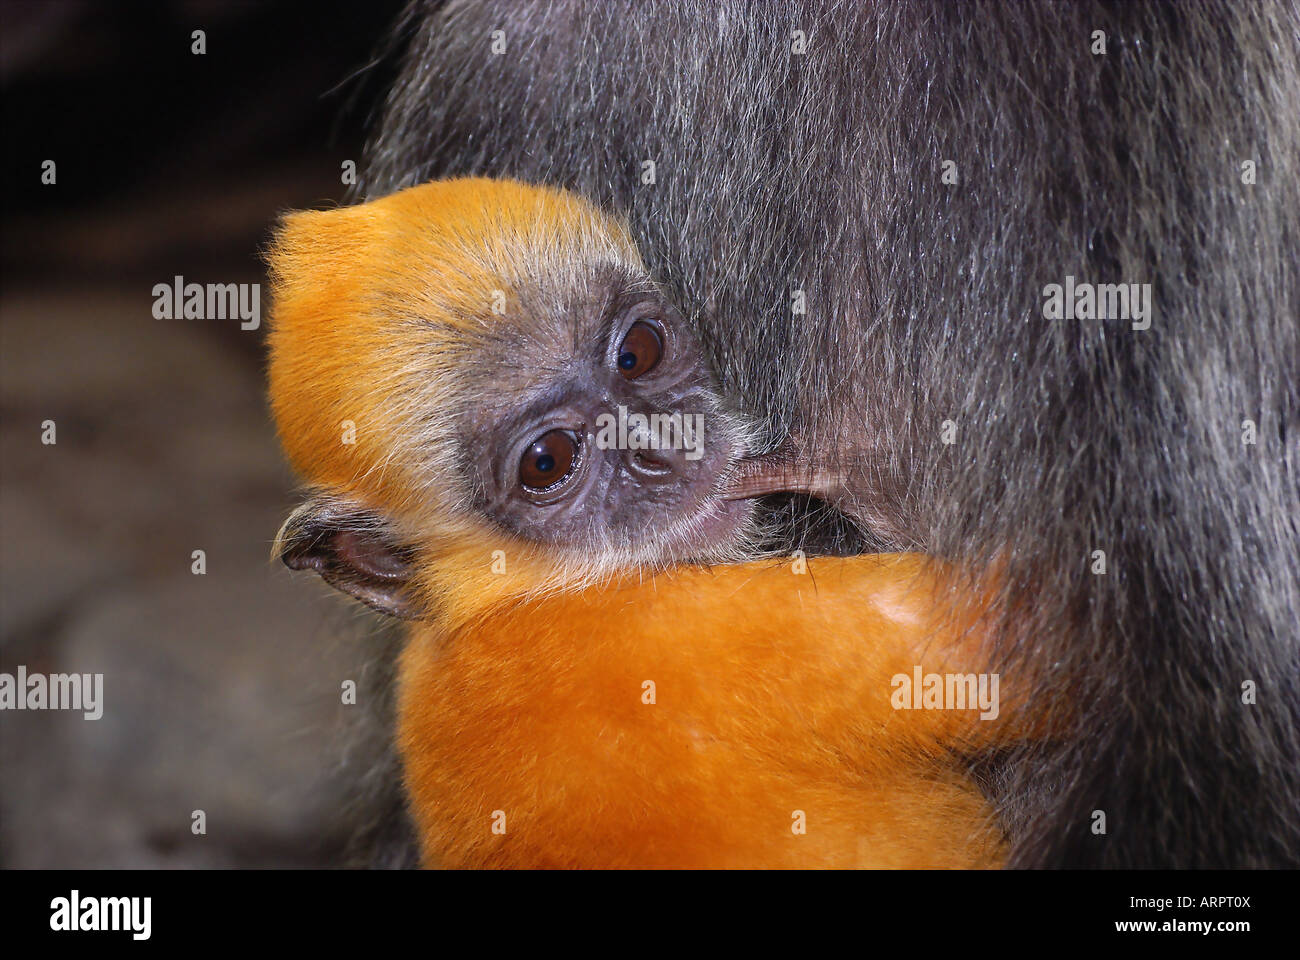 Silver leaf monkey breastfeeding Stock Photo